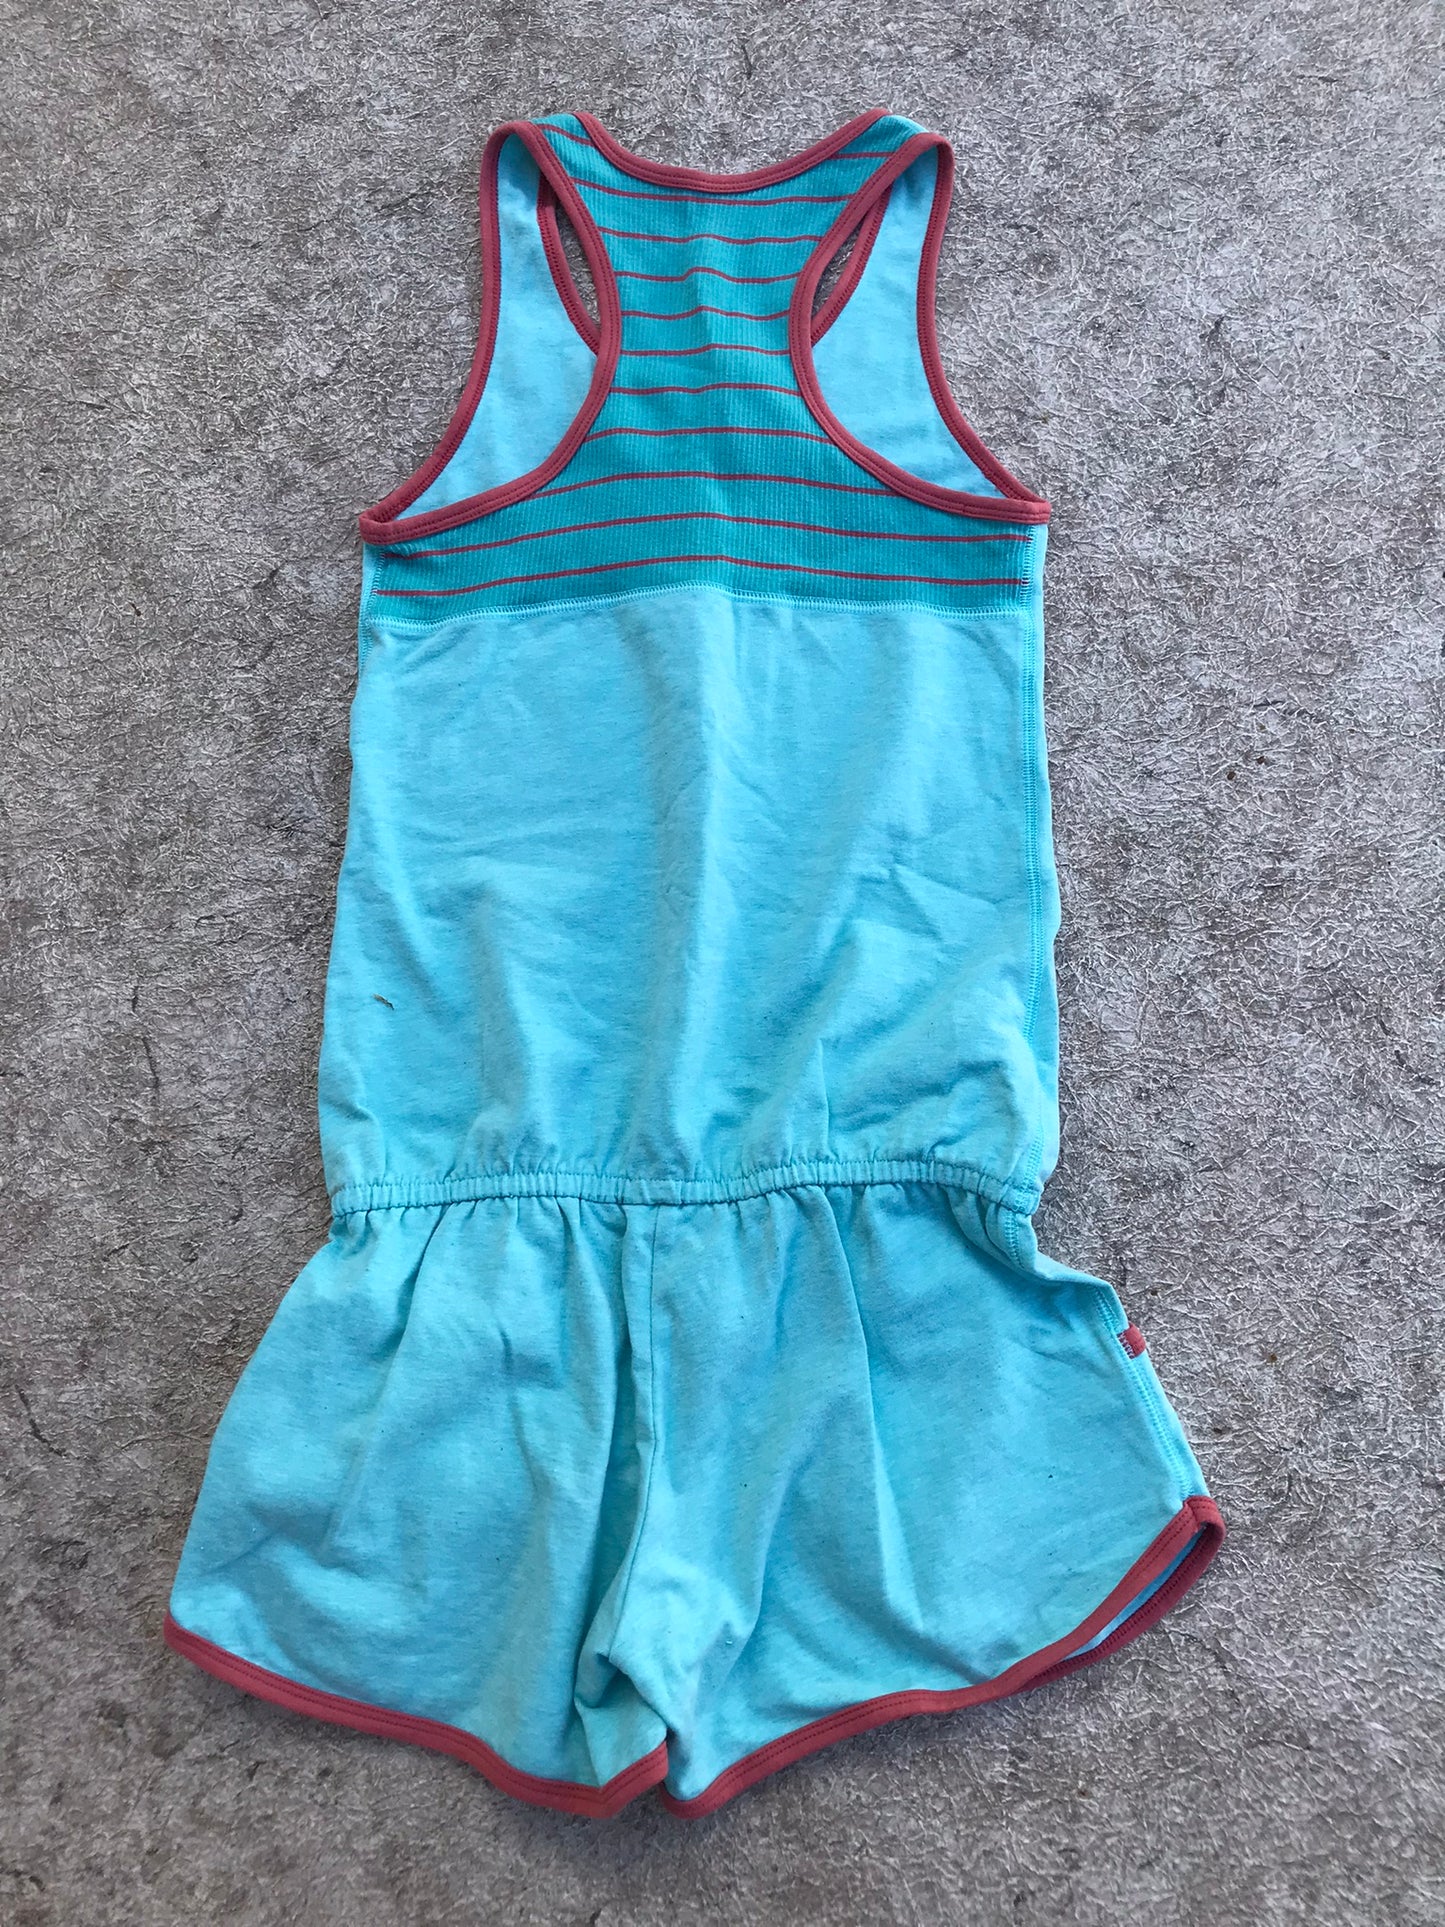 Summer Sports Romper Child Size 14-16 Nike Tank Short 1 pc Aqua Blue As New